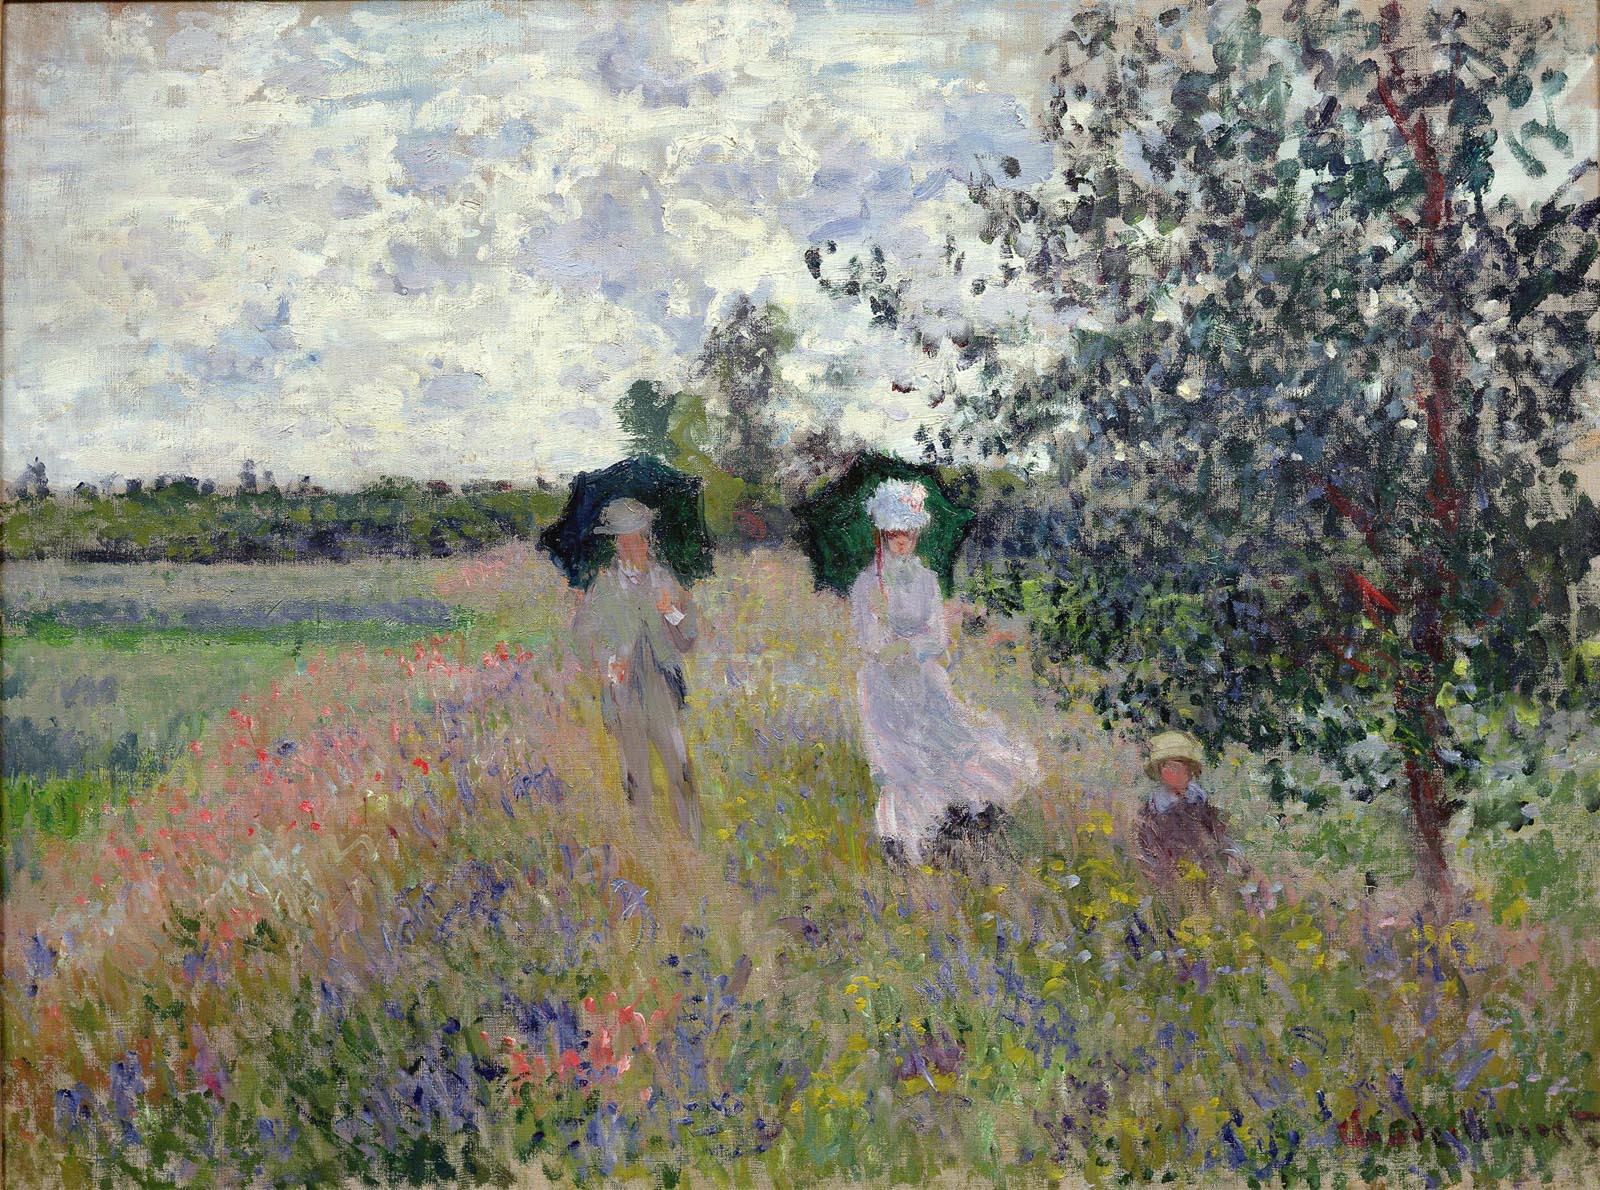 Claude+Monet-1840-1926 (599).jpg